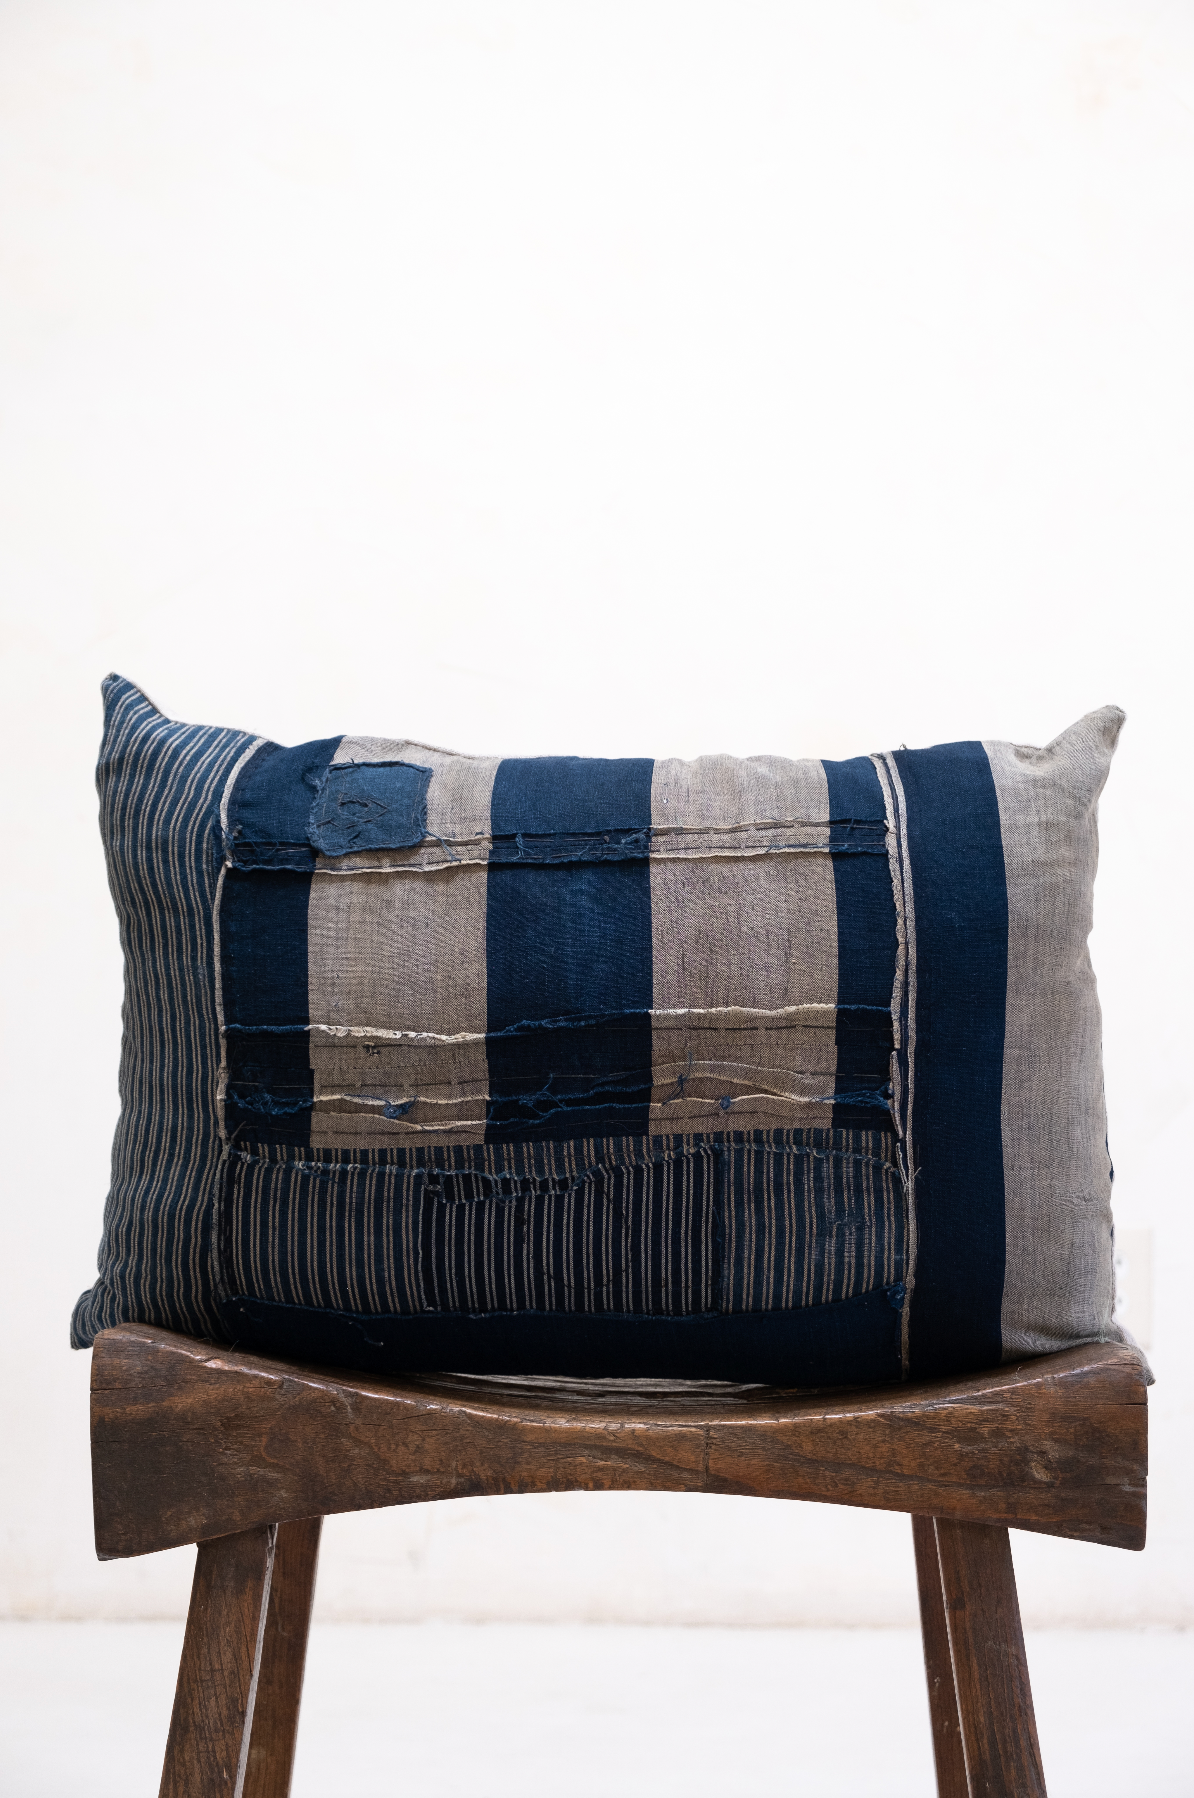 Blue Japanese Pillows, Vintage